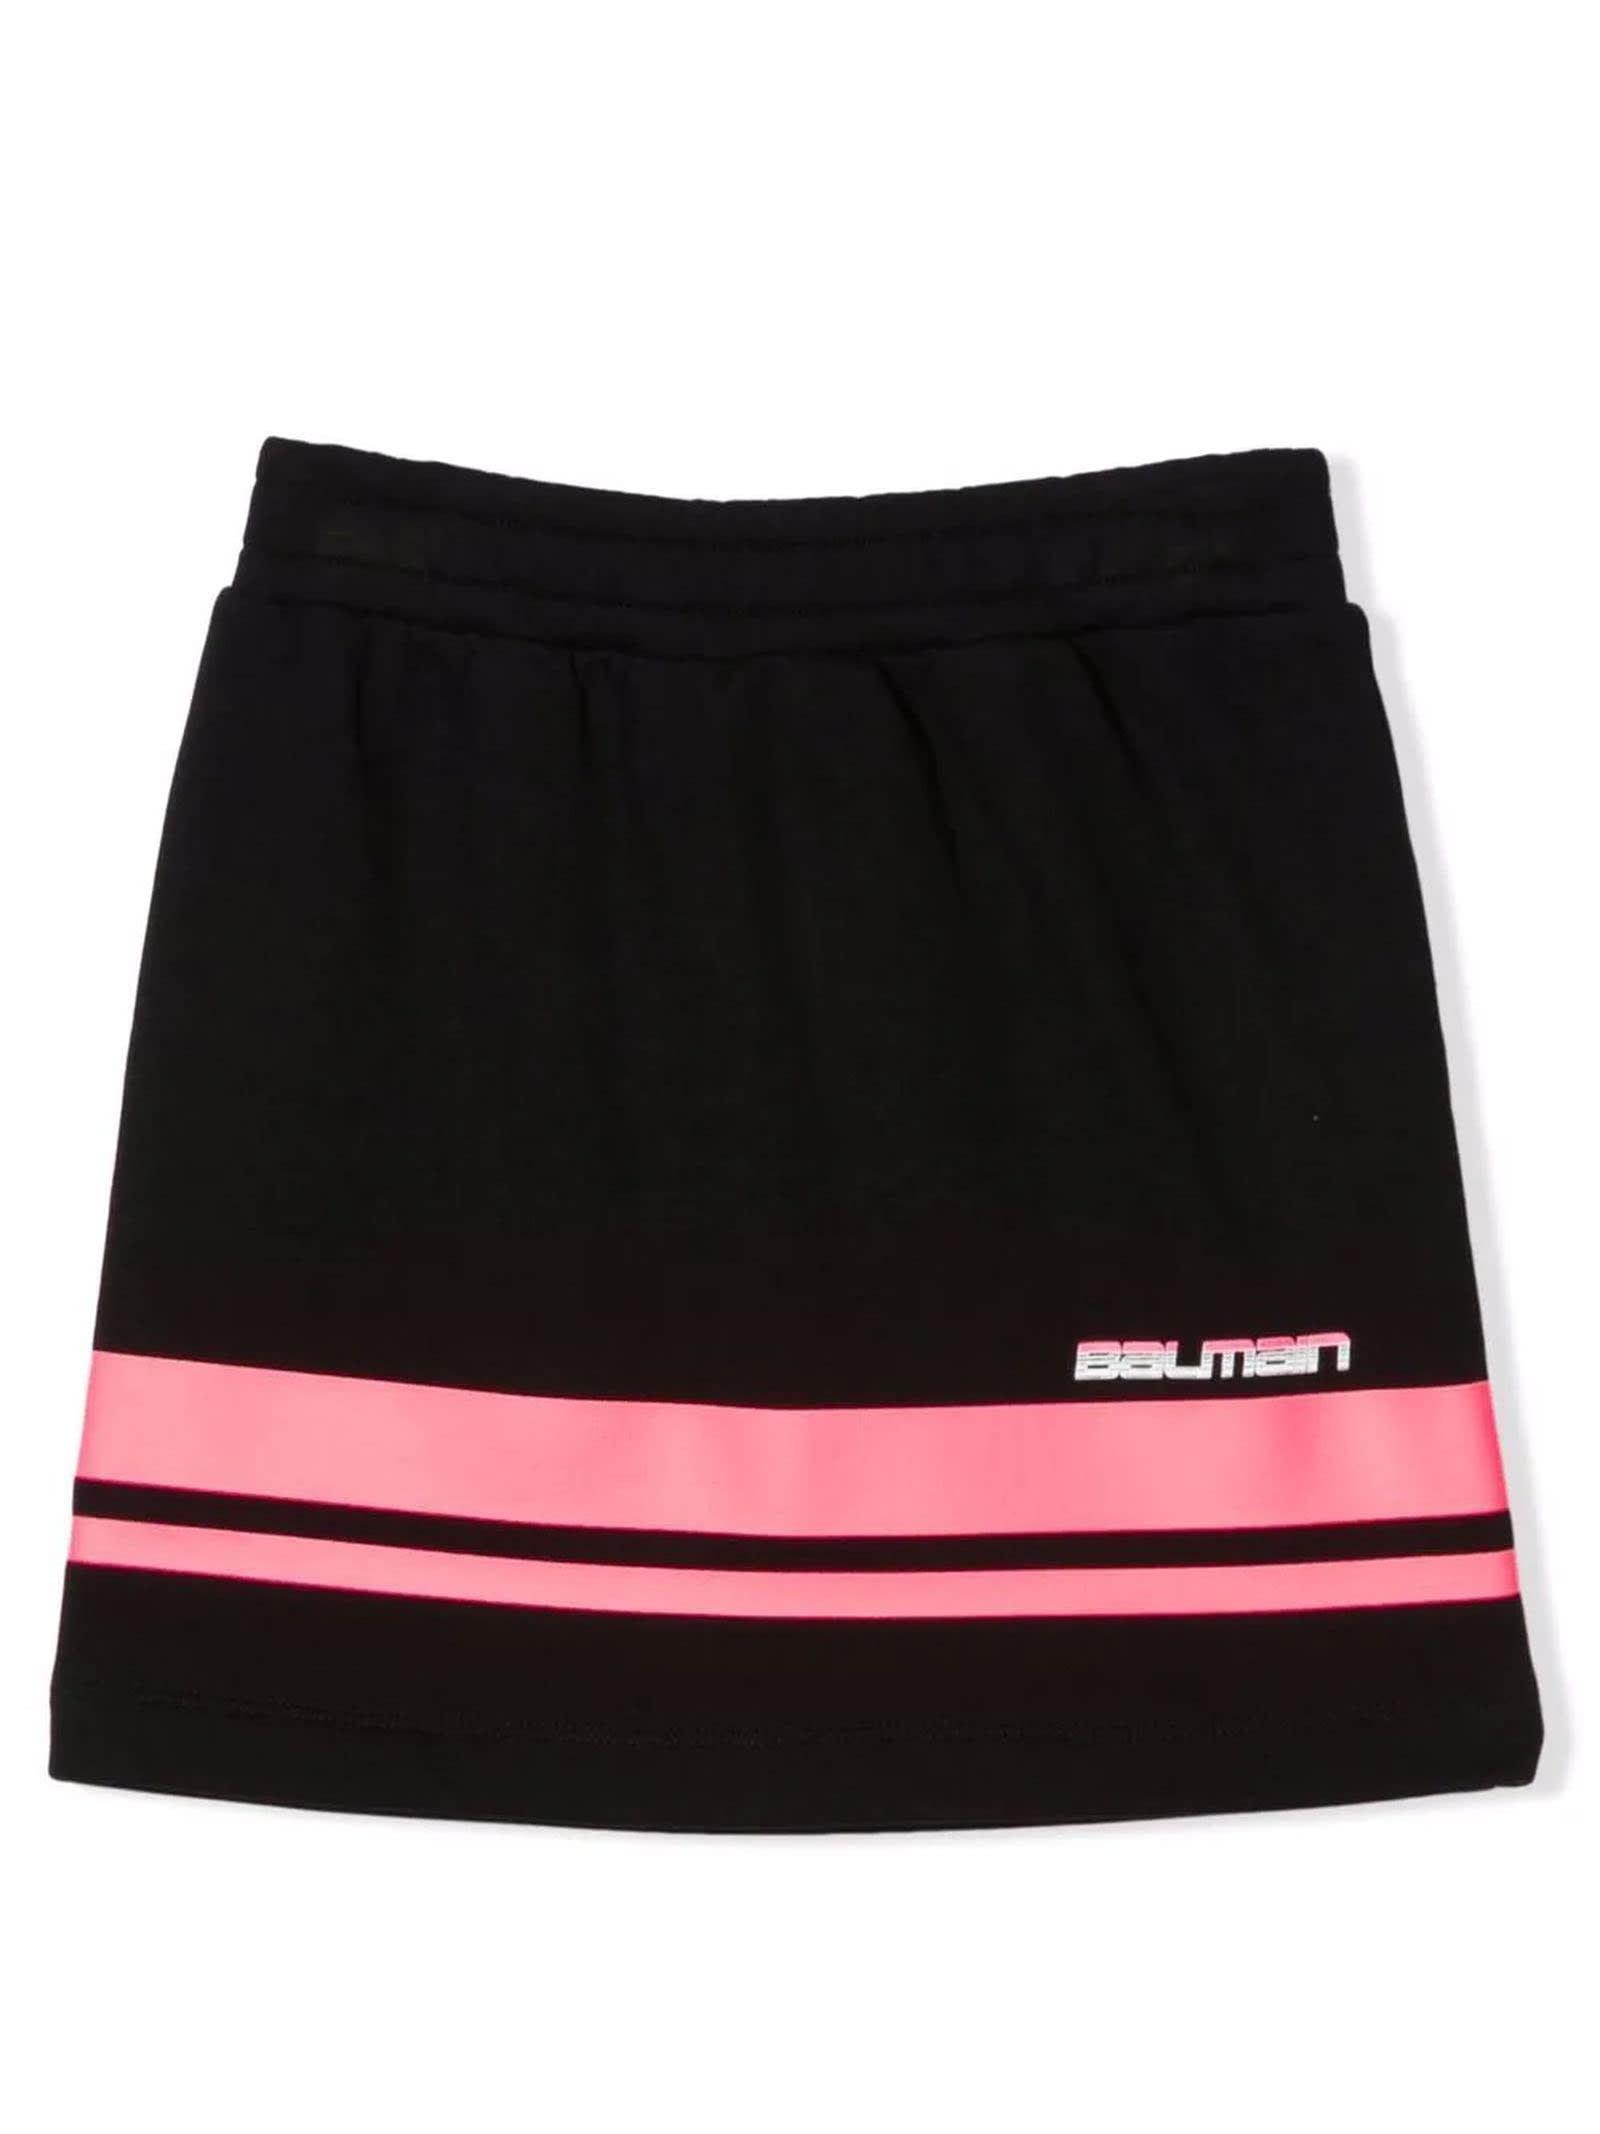 Balmain Black Cotton Skirt